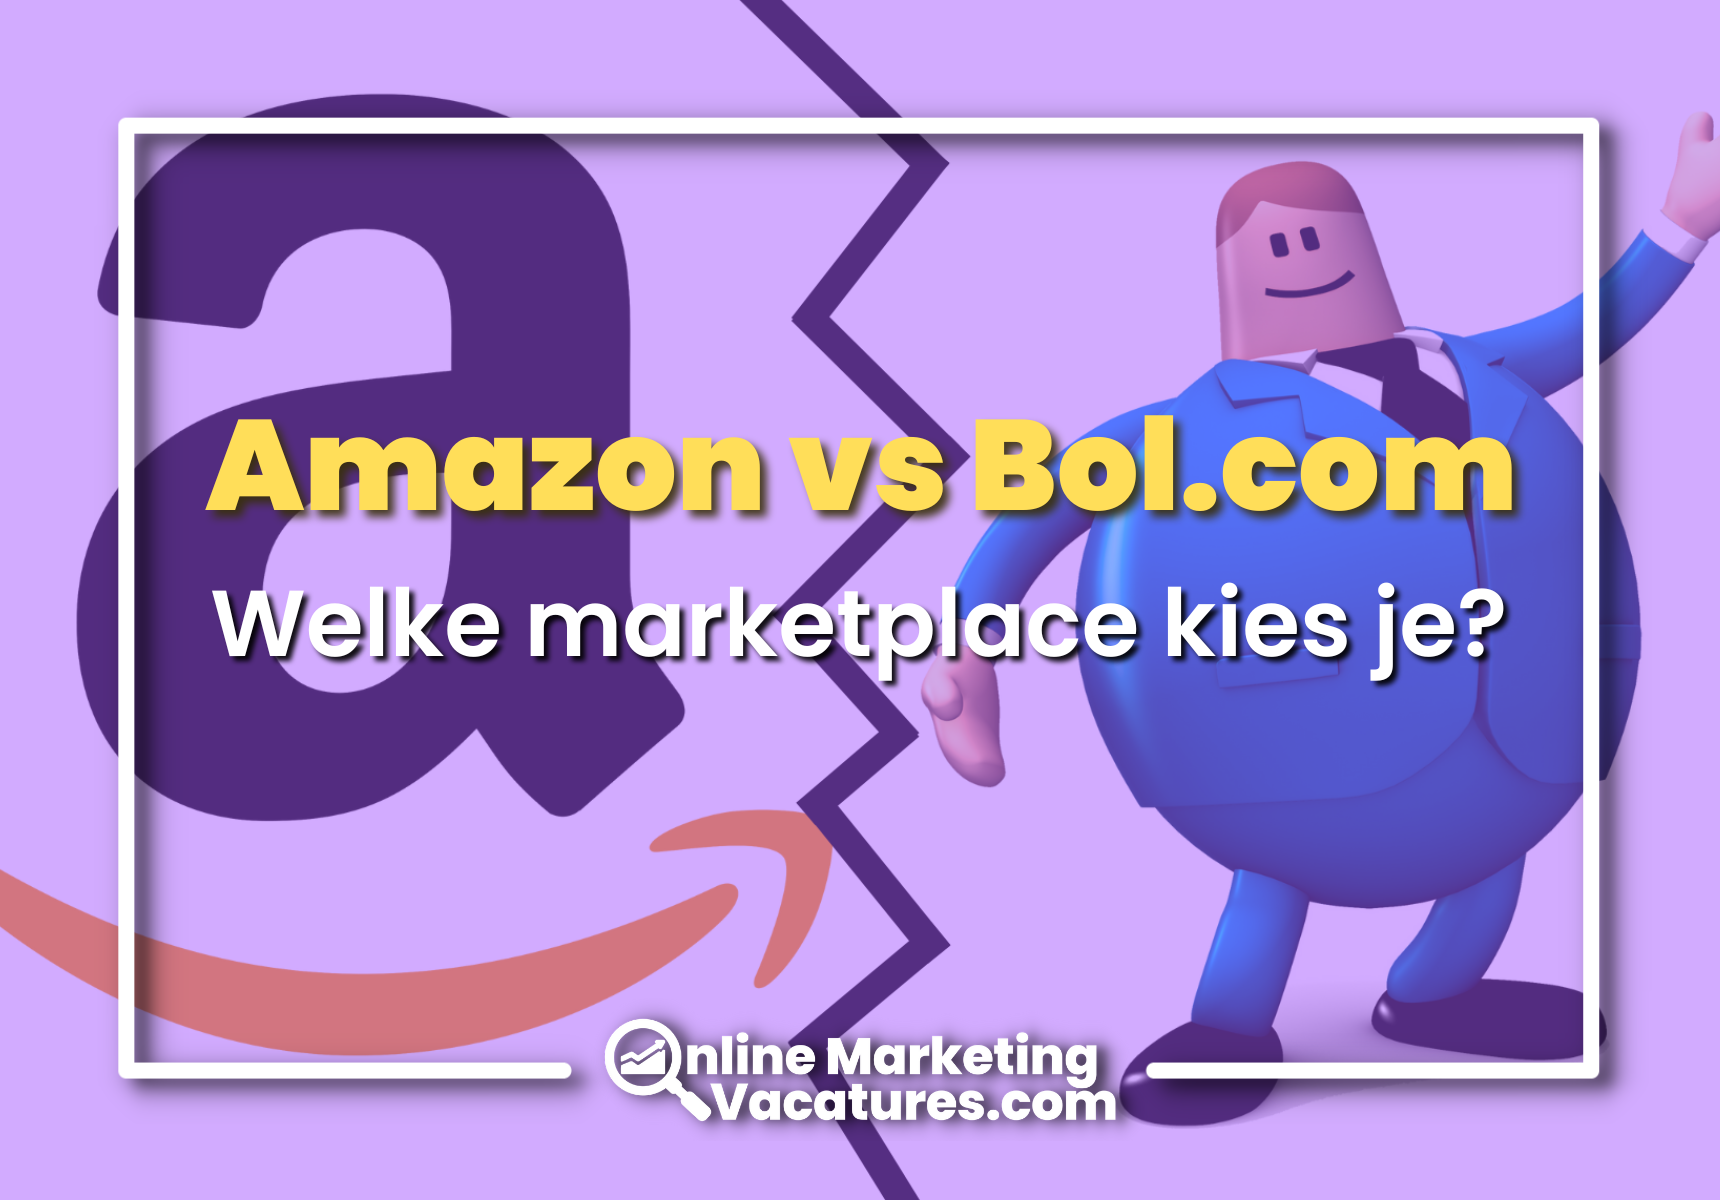 Amazon vs. Bol.com, kies je marketplace